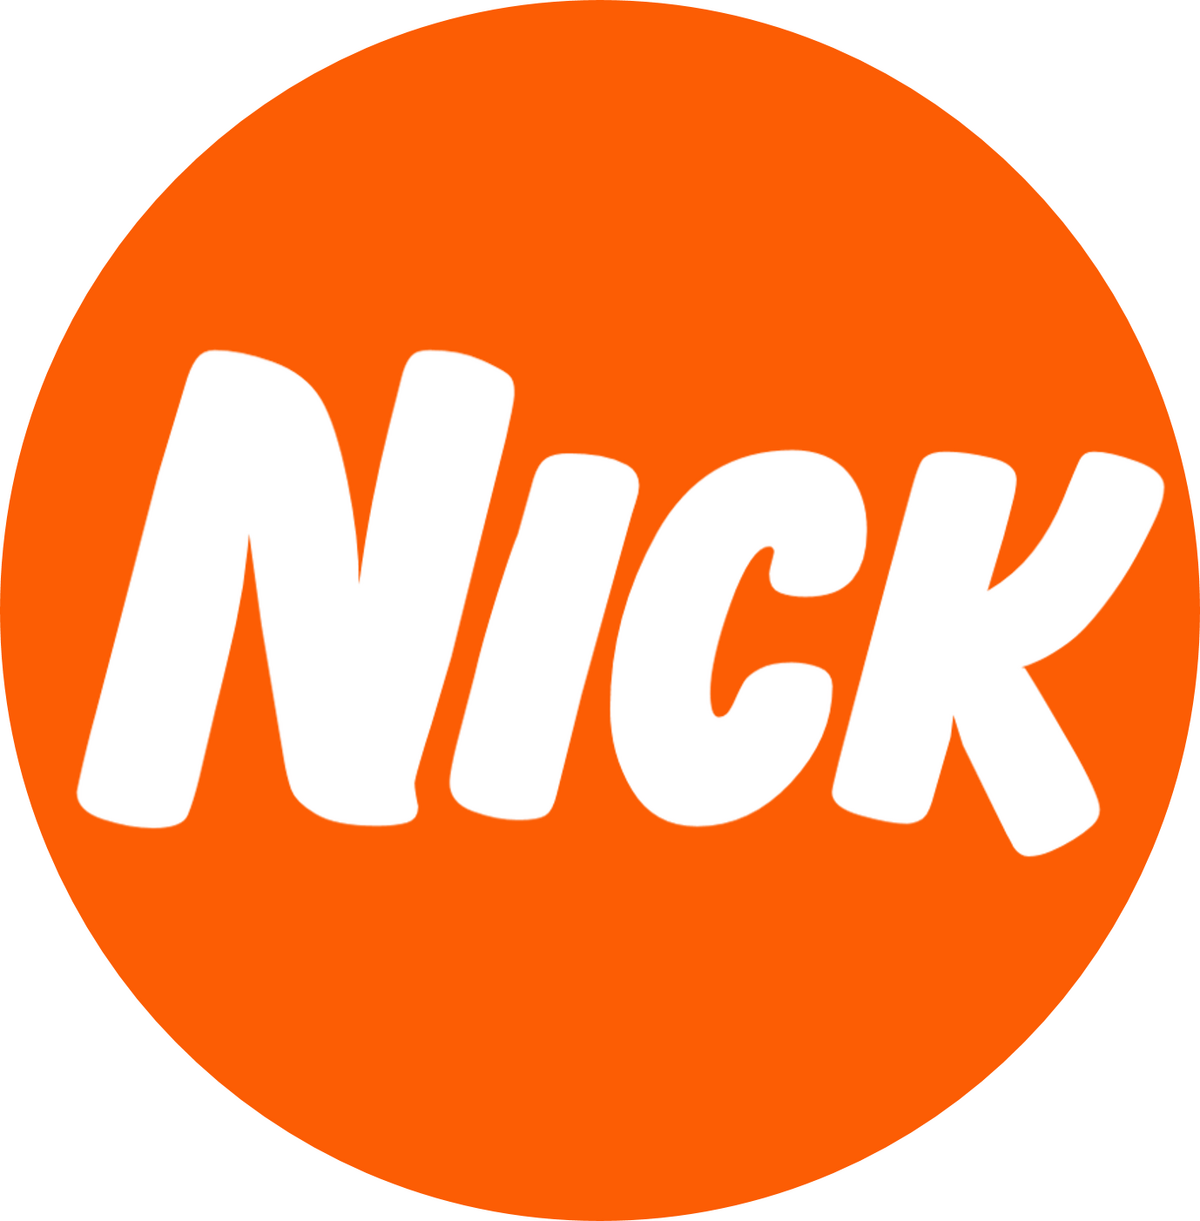 Nick channel. Телеканал Nickelodeon. Никелодеон значок канала. Ник логотип.